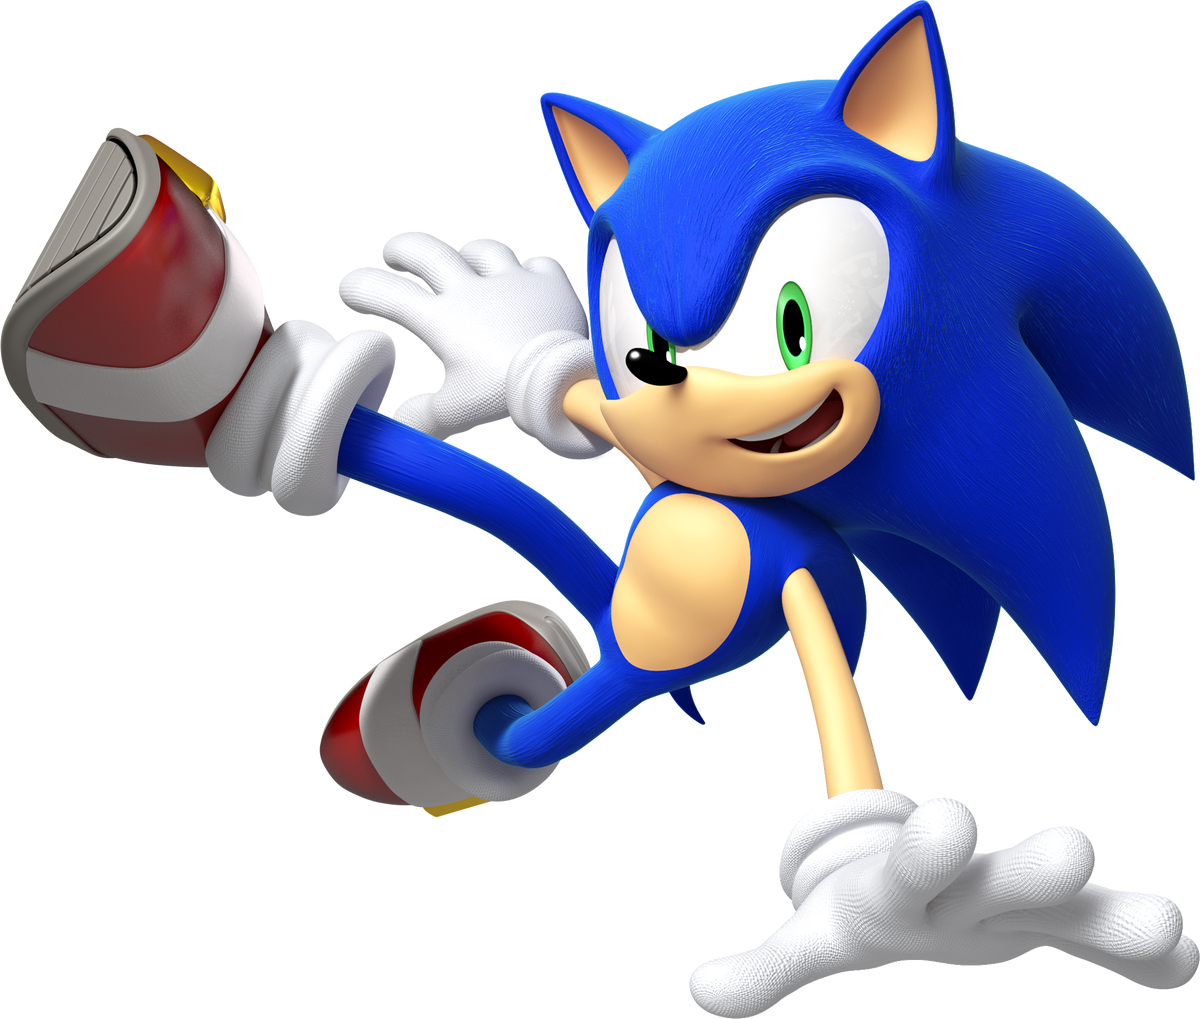 Sonic the Hedgehog 2 (Video Game 1992) - IMDb